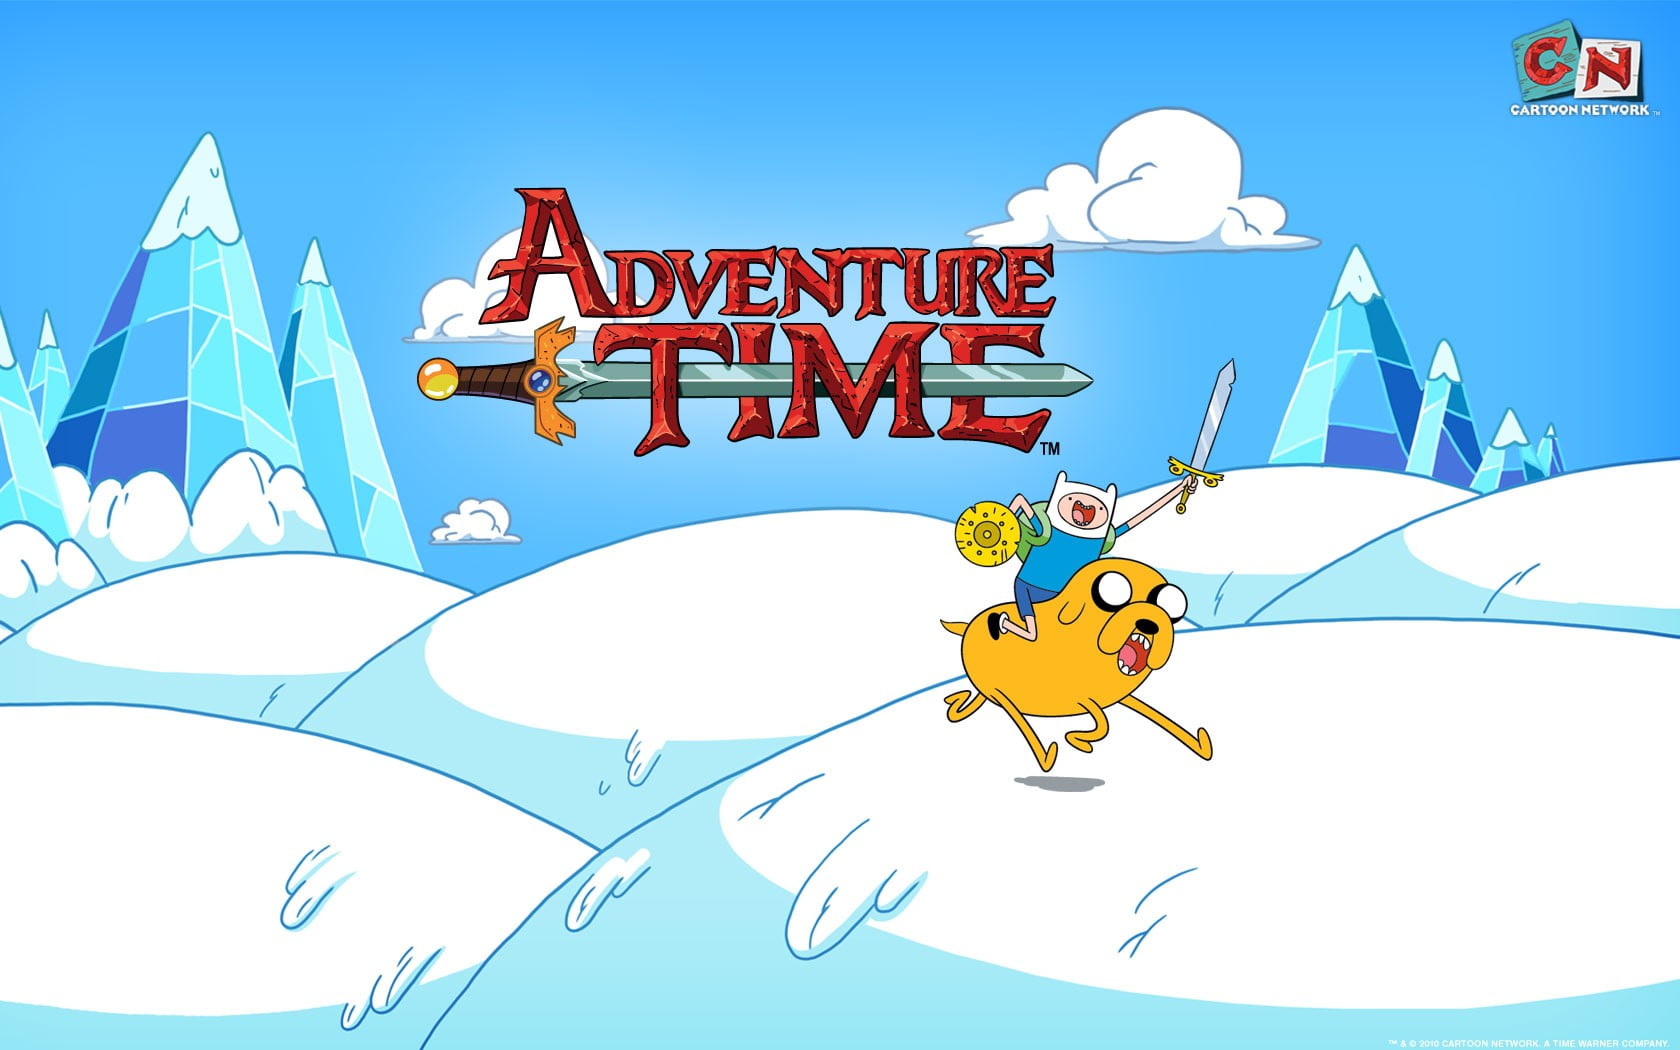 Adventure Time digital wallpaper, Cartoon Network, Jake the Dog